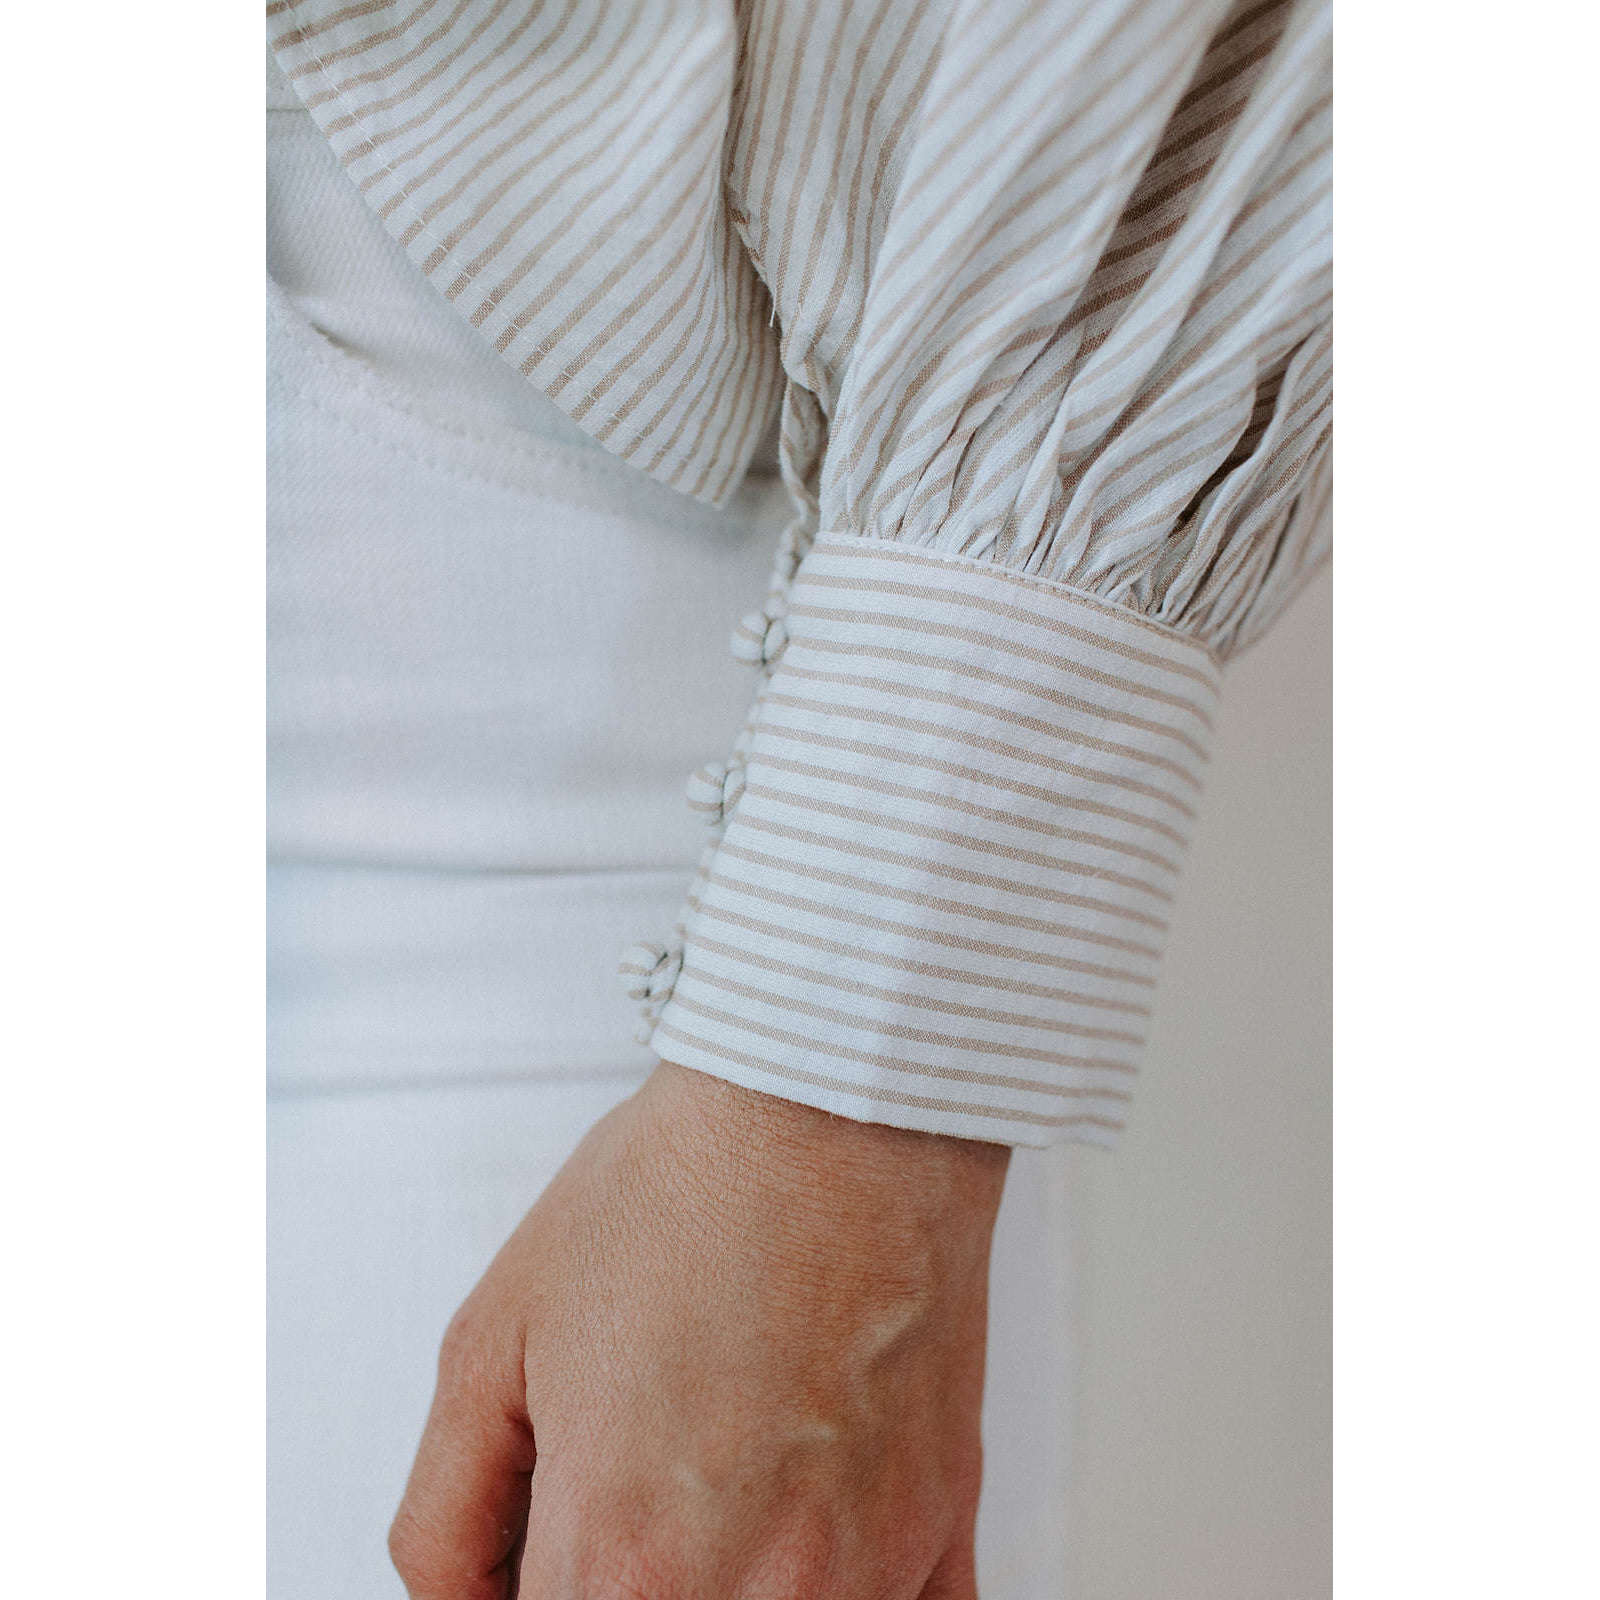 8.28 Boutique:Karlie Clothes,Karlie Tan Stripe Seersucker Ruffle Sleeve Top,Shirts & Tops